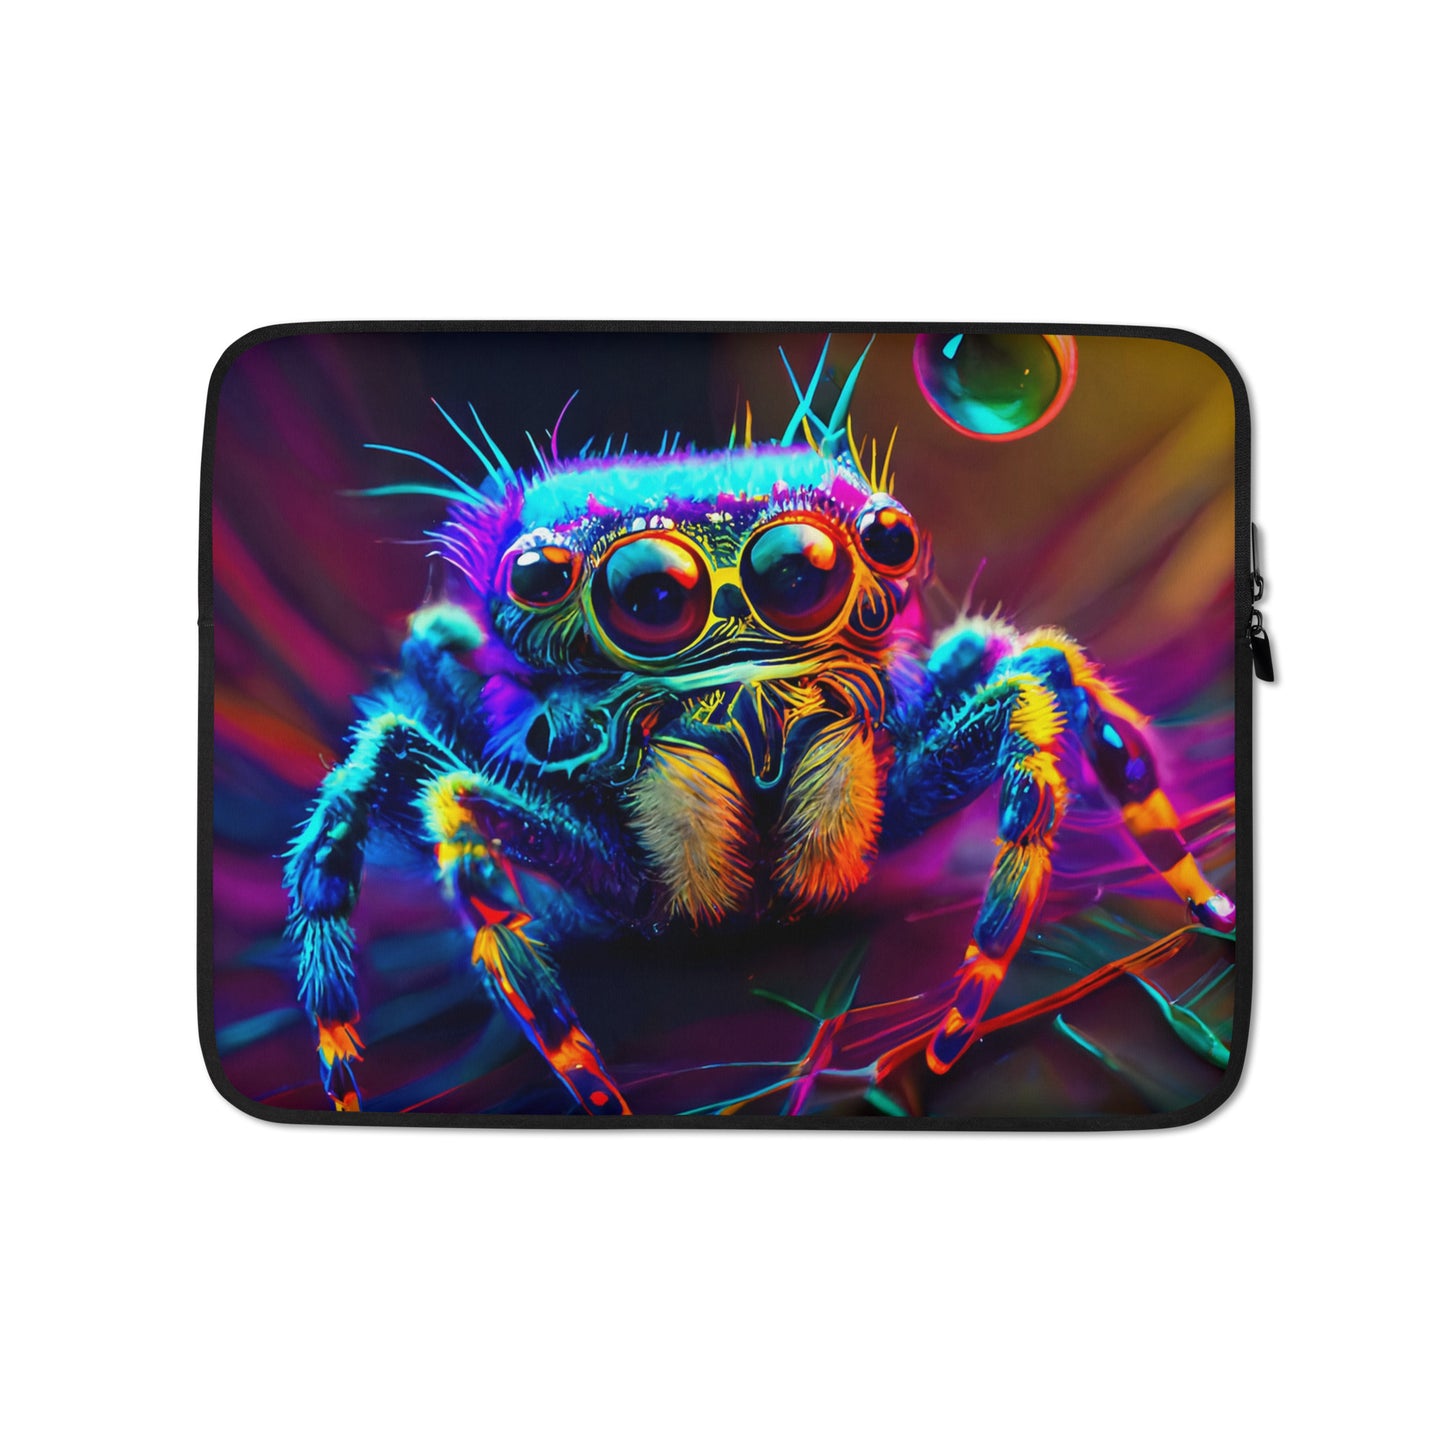 Trippy Regal Jumping Spider Laptop Sleeve - Jumping Spiders For Sale - Spiders Source - #1 Regal Jumping Spider Store